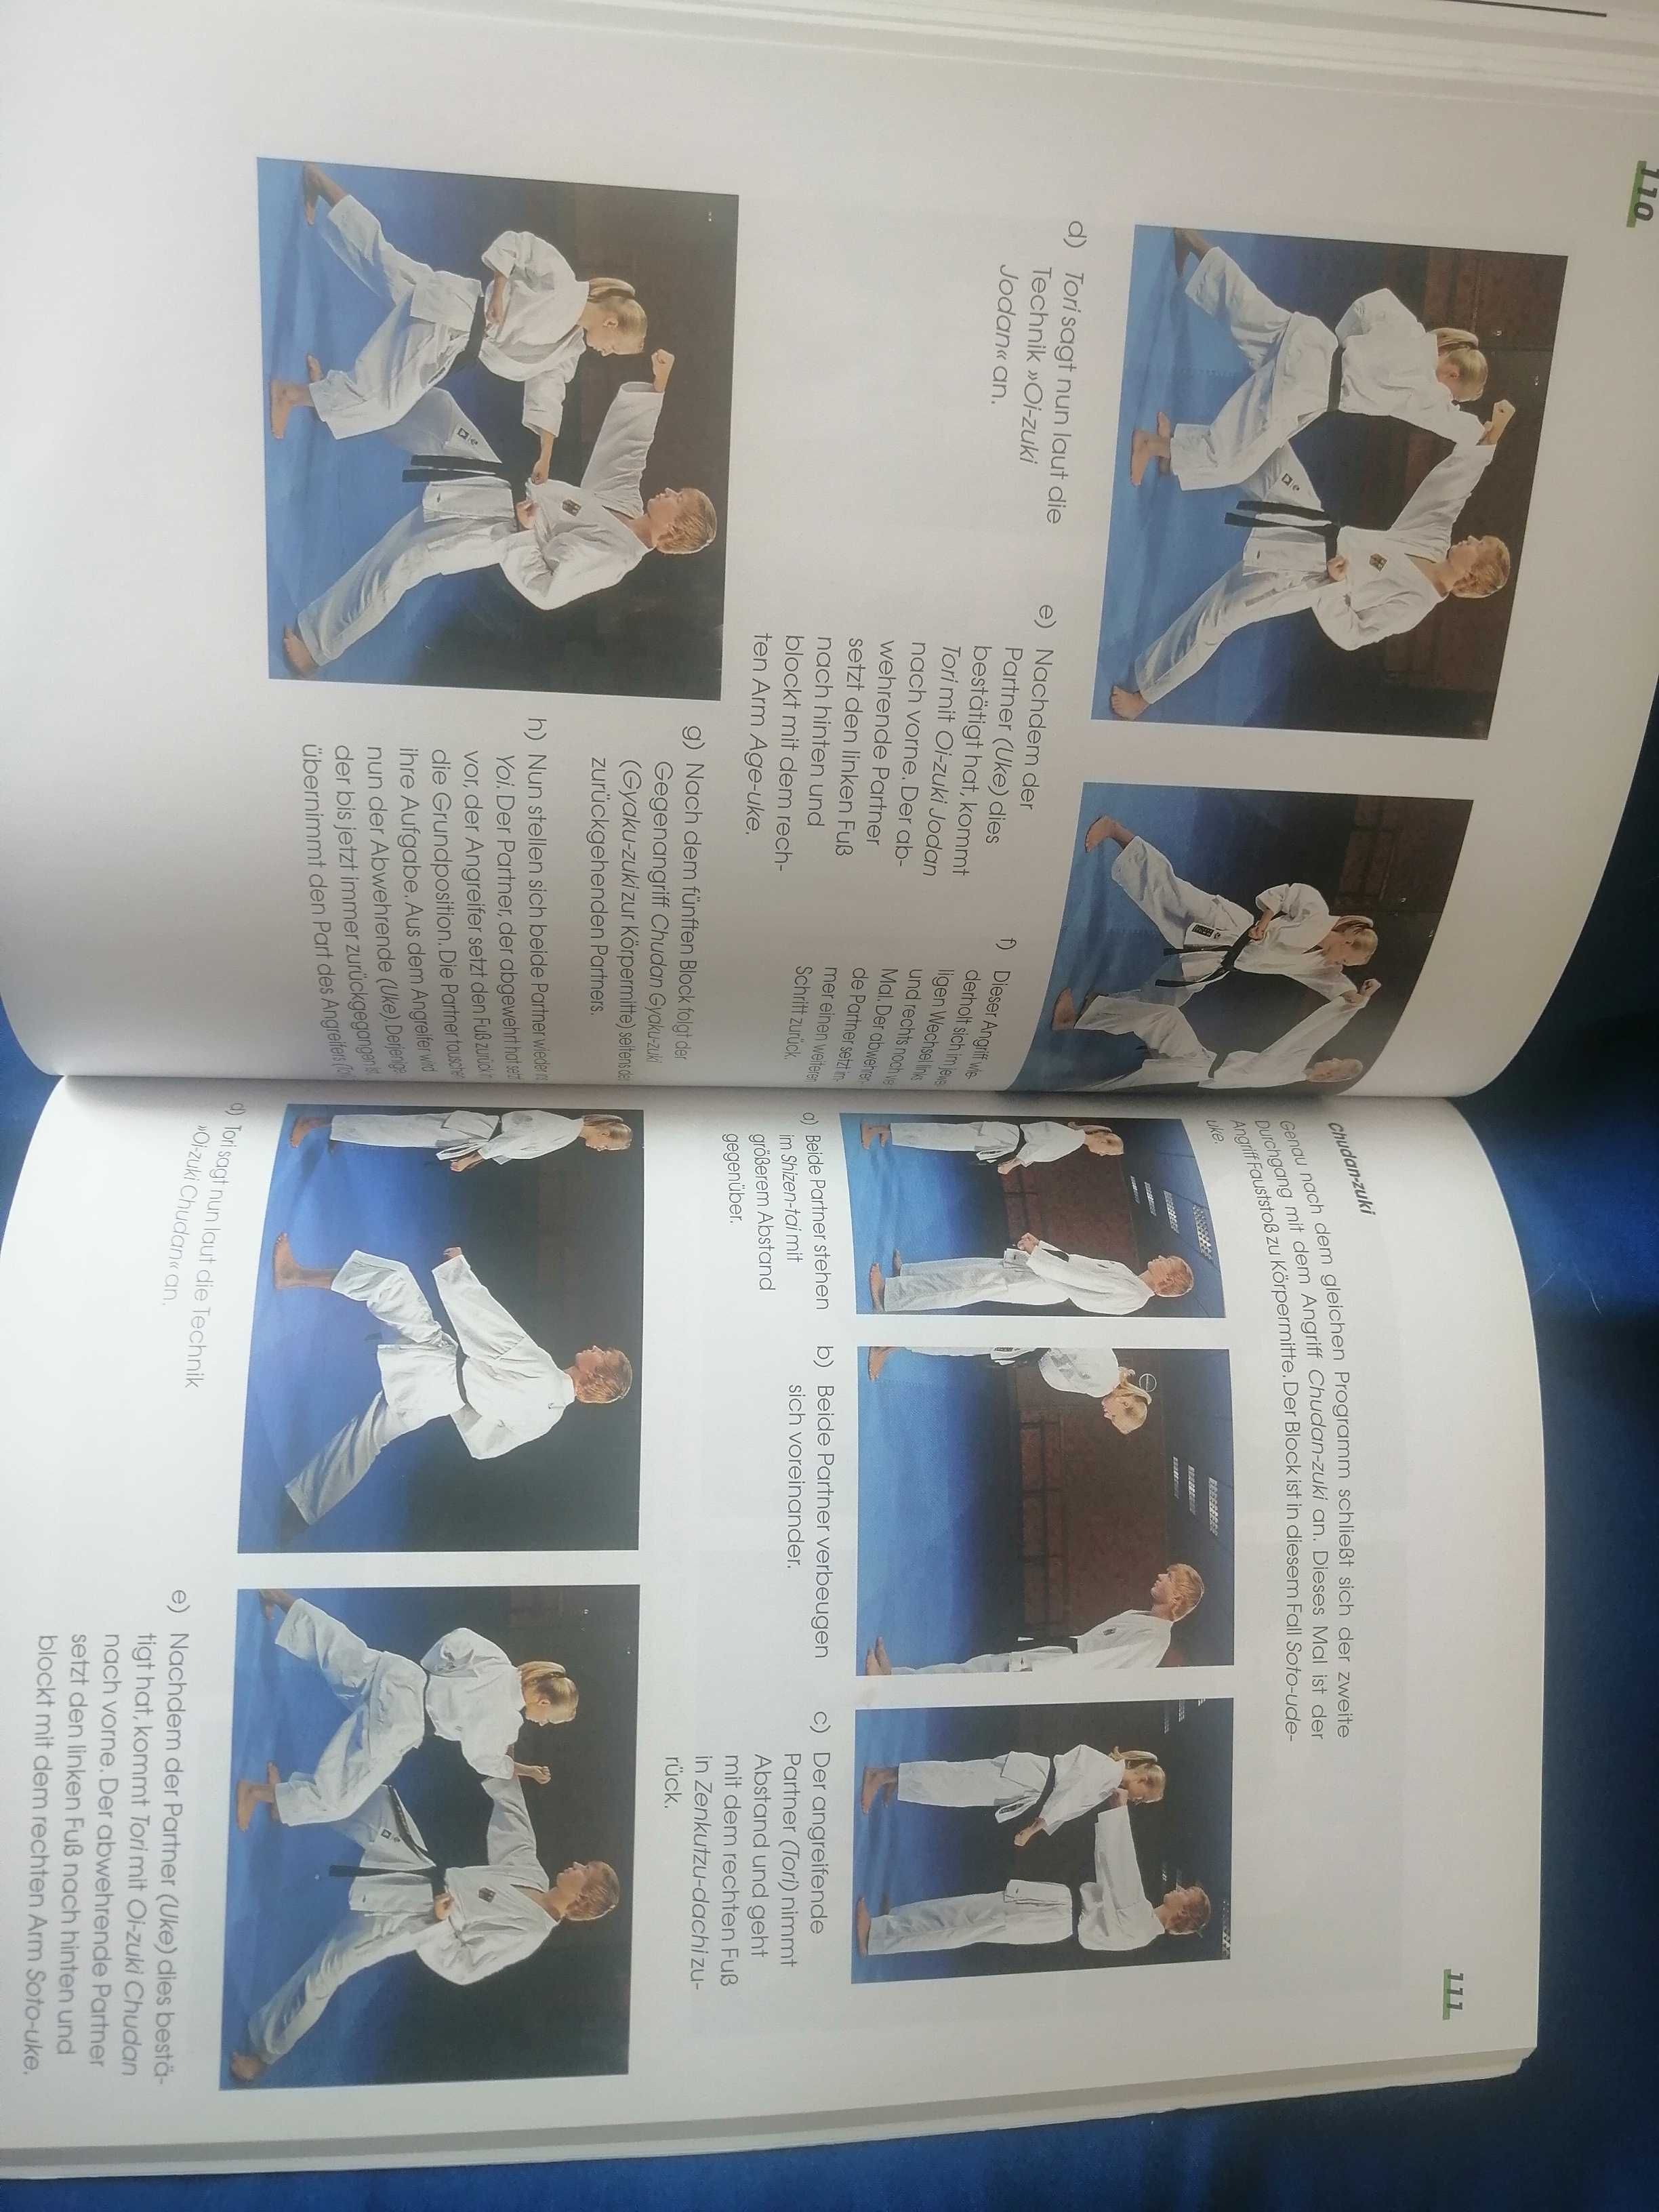 ksiazka karate basics niemiecka